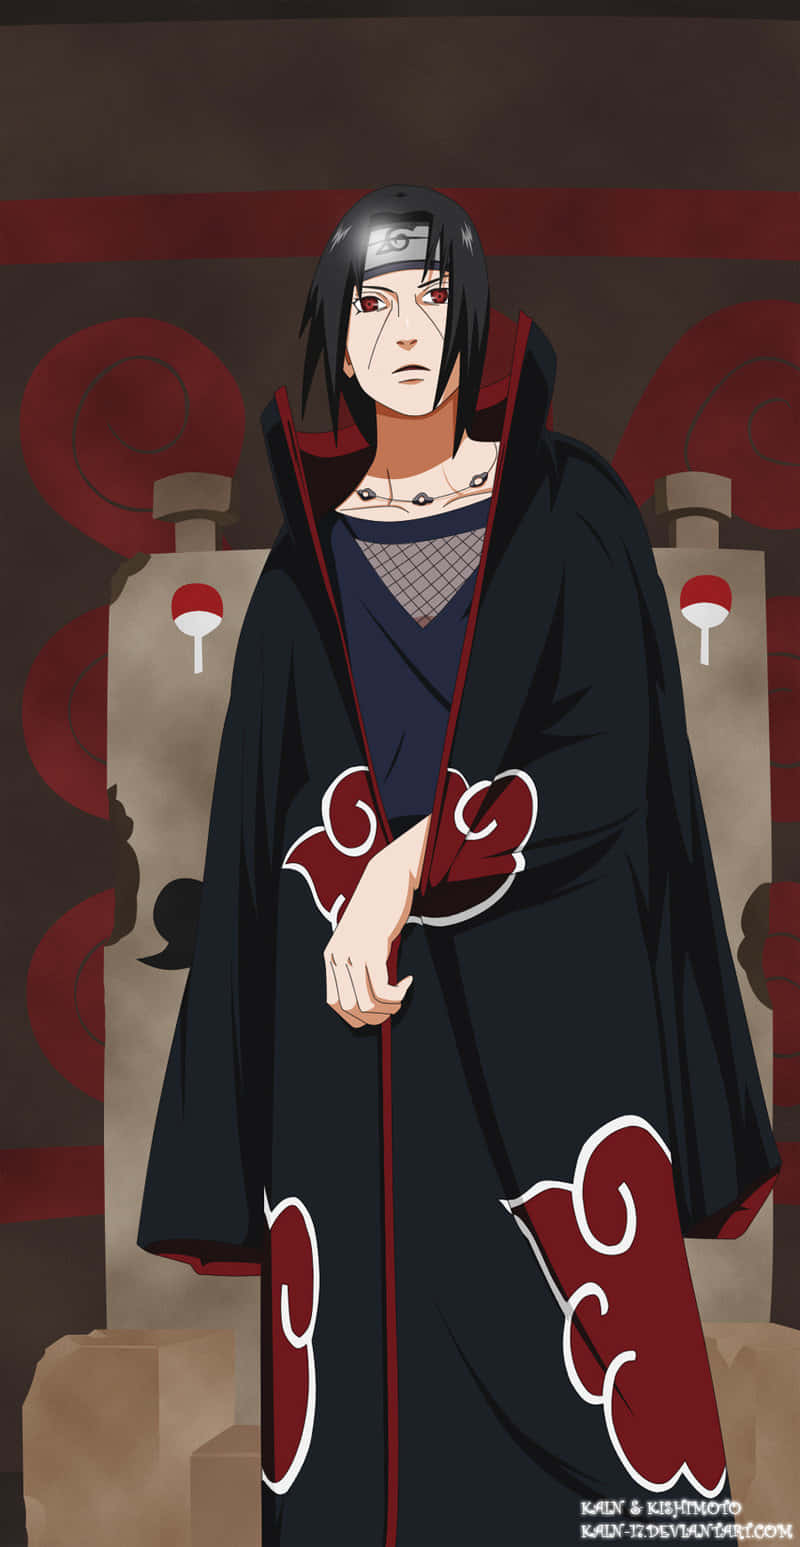 Itachi Uchiha, a character from the anime "Naruto".